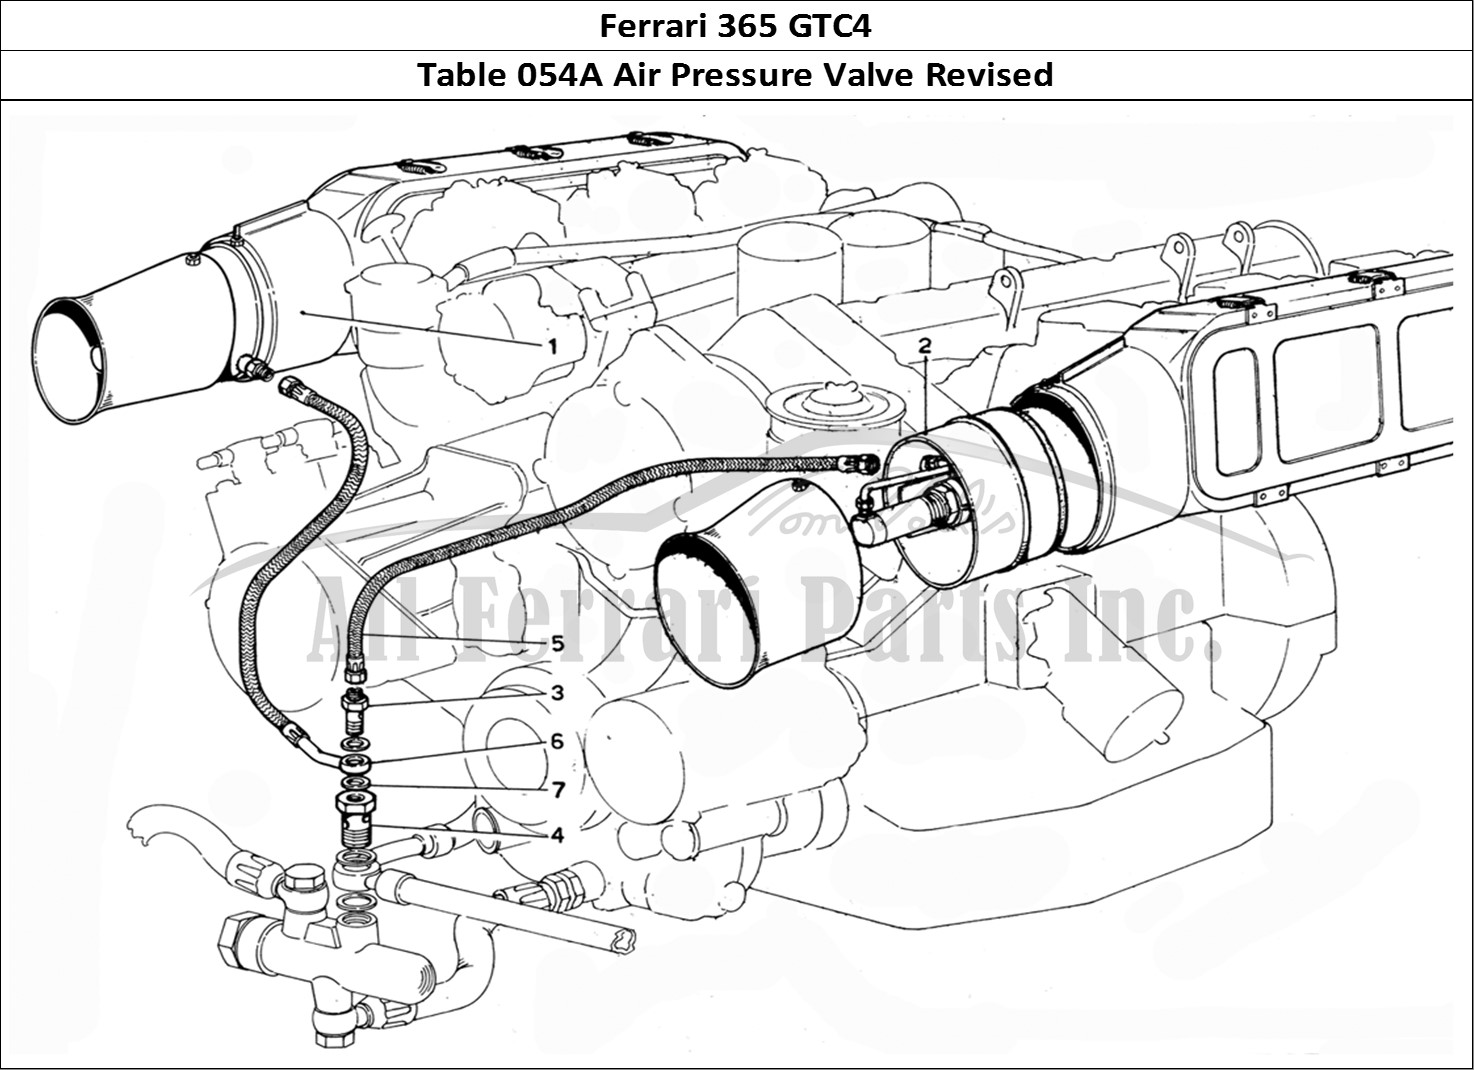 Ferrari Parts Ferrari 365 GTC4 (Mechanical) Page 054 Air pressure valve- Revis